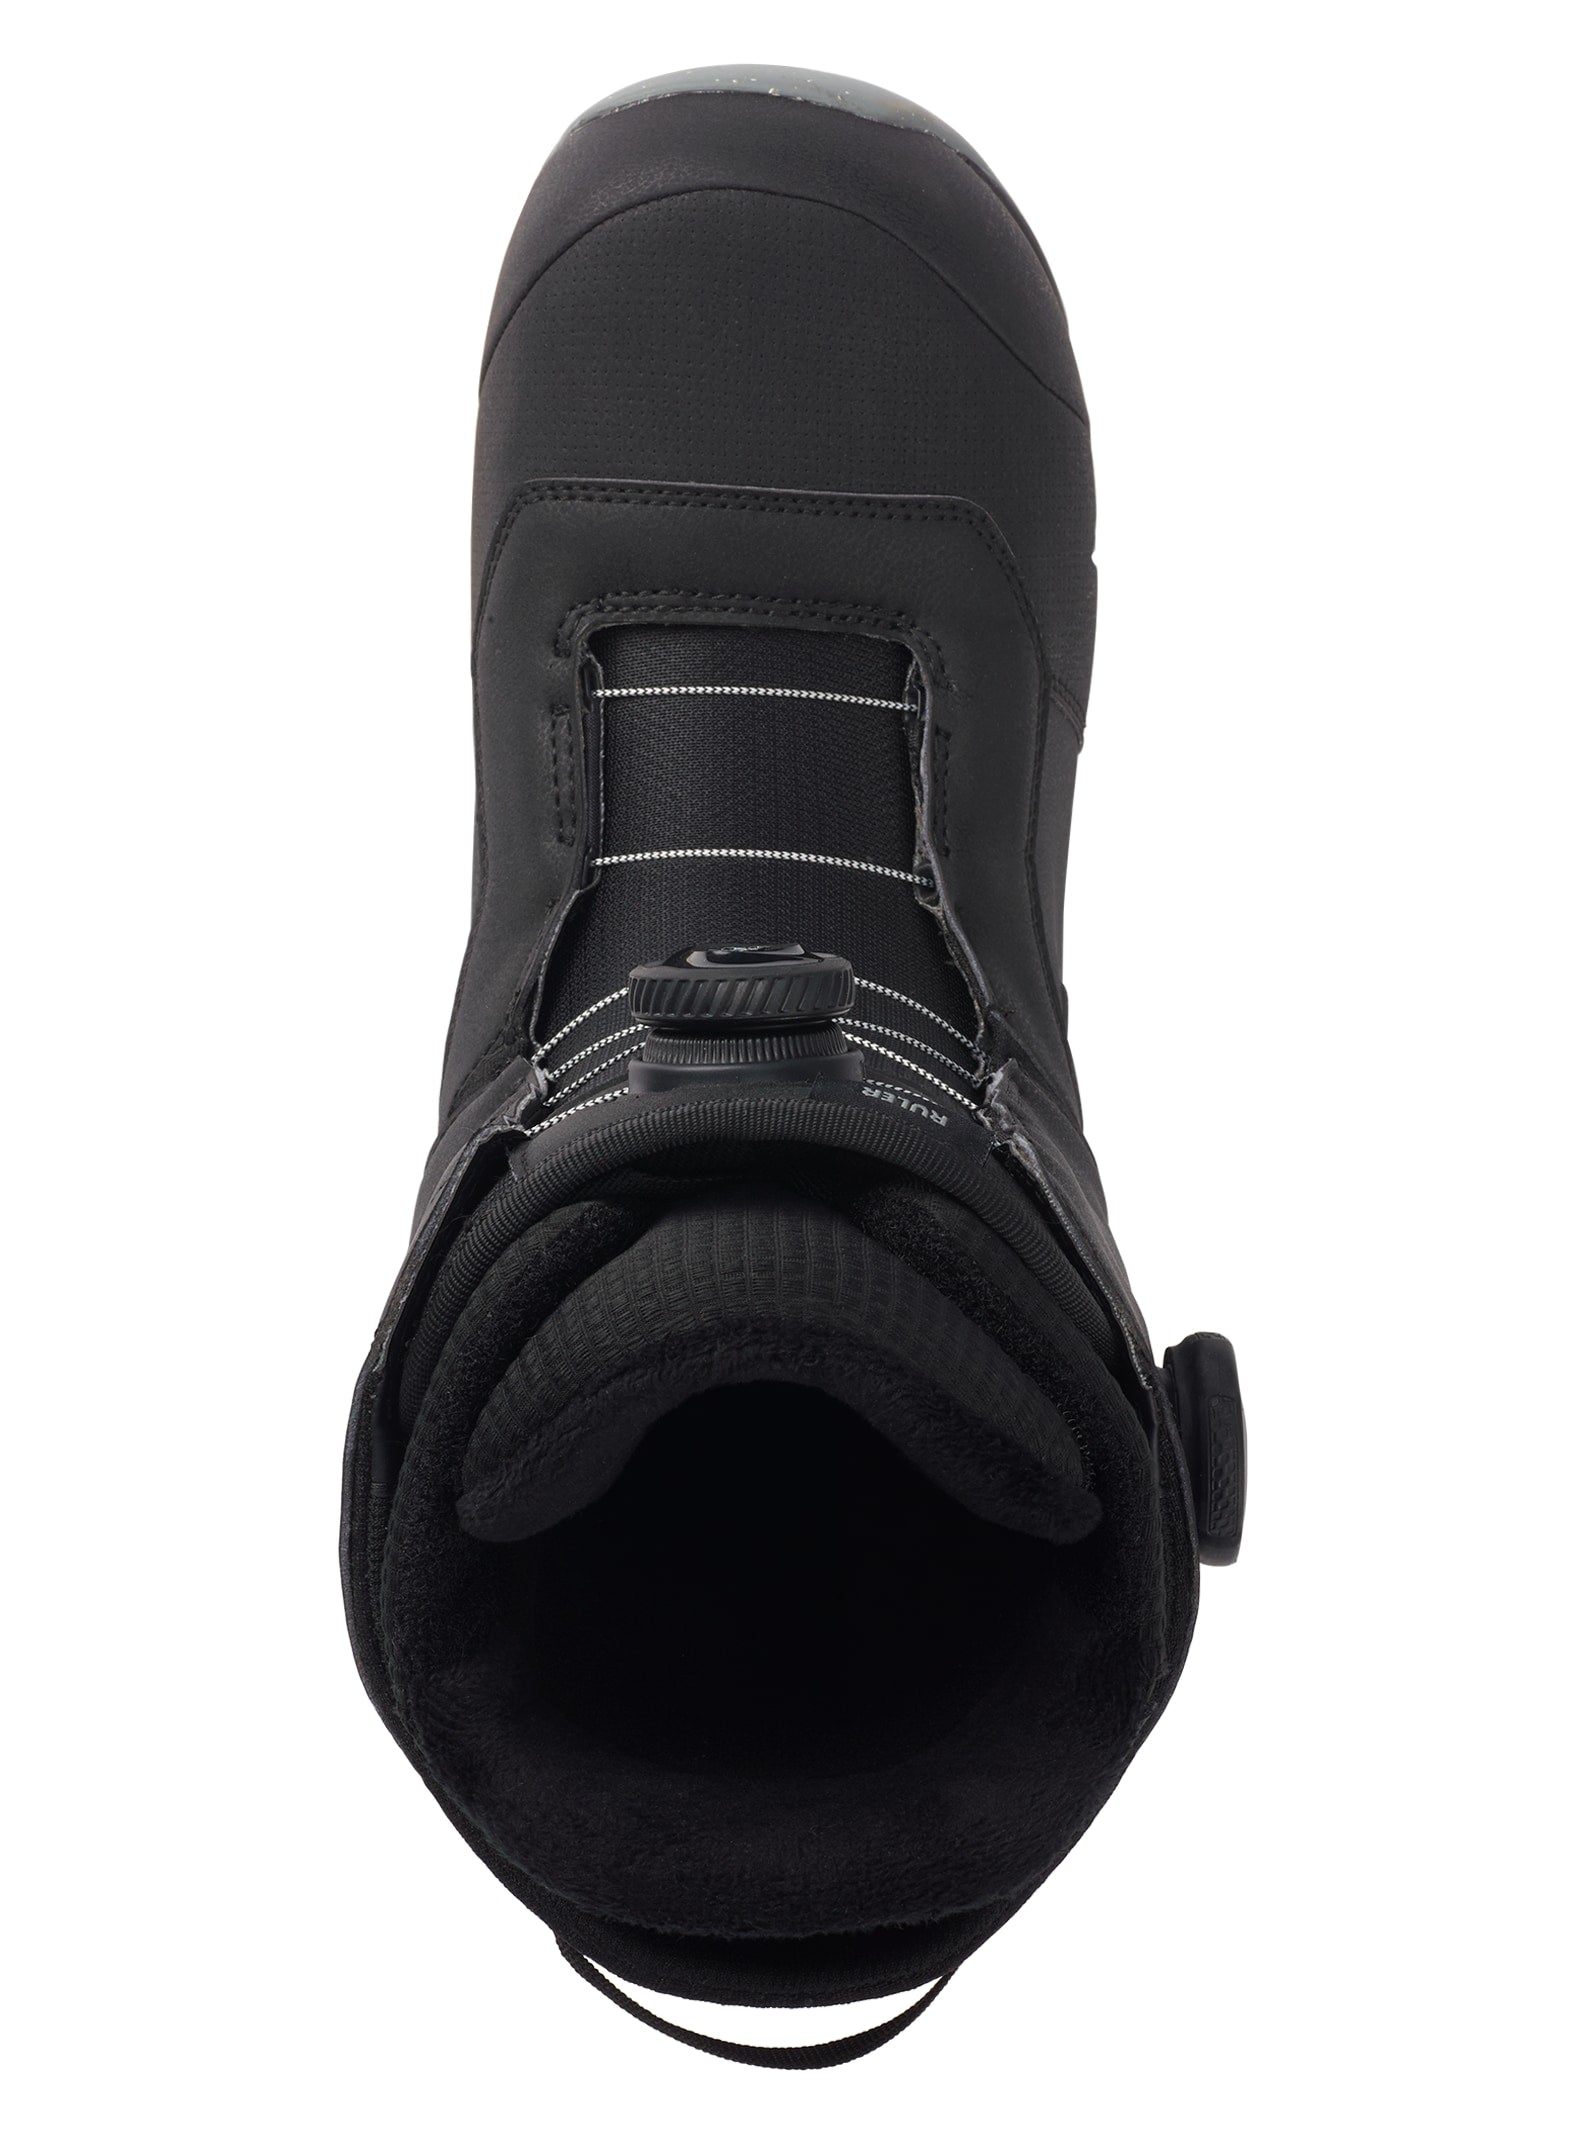 Men's Ruler BOA® Snowboard Boots, Black